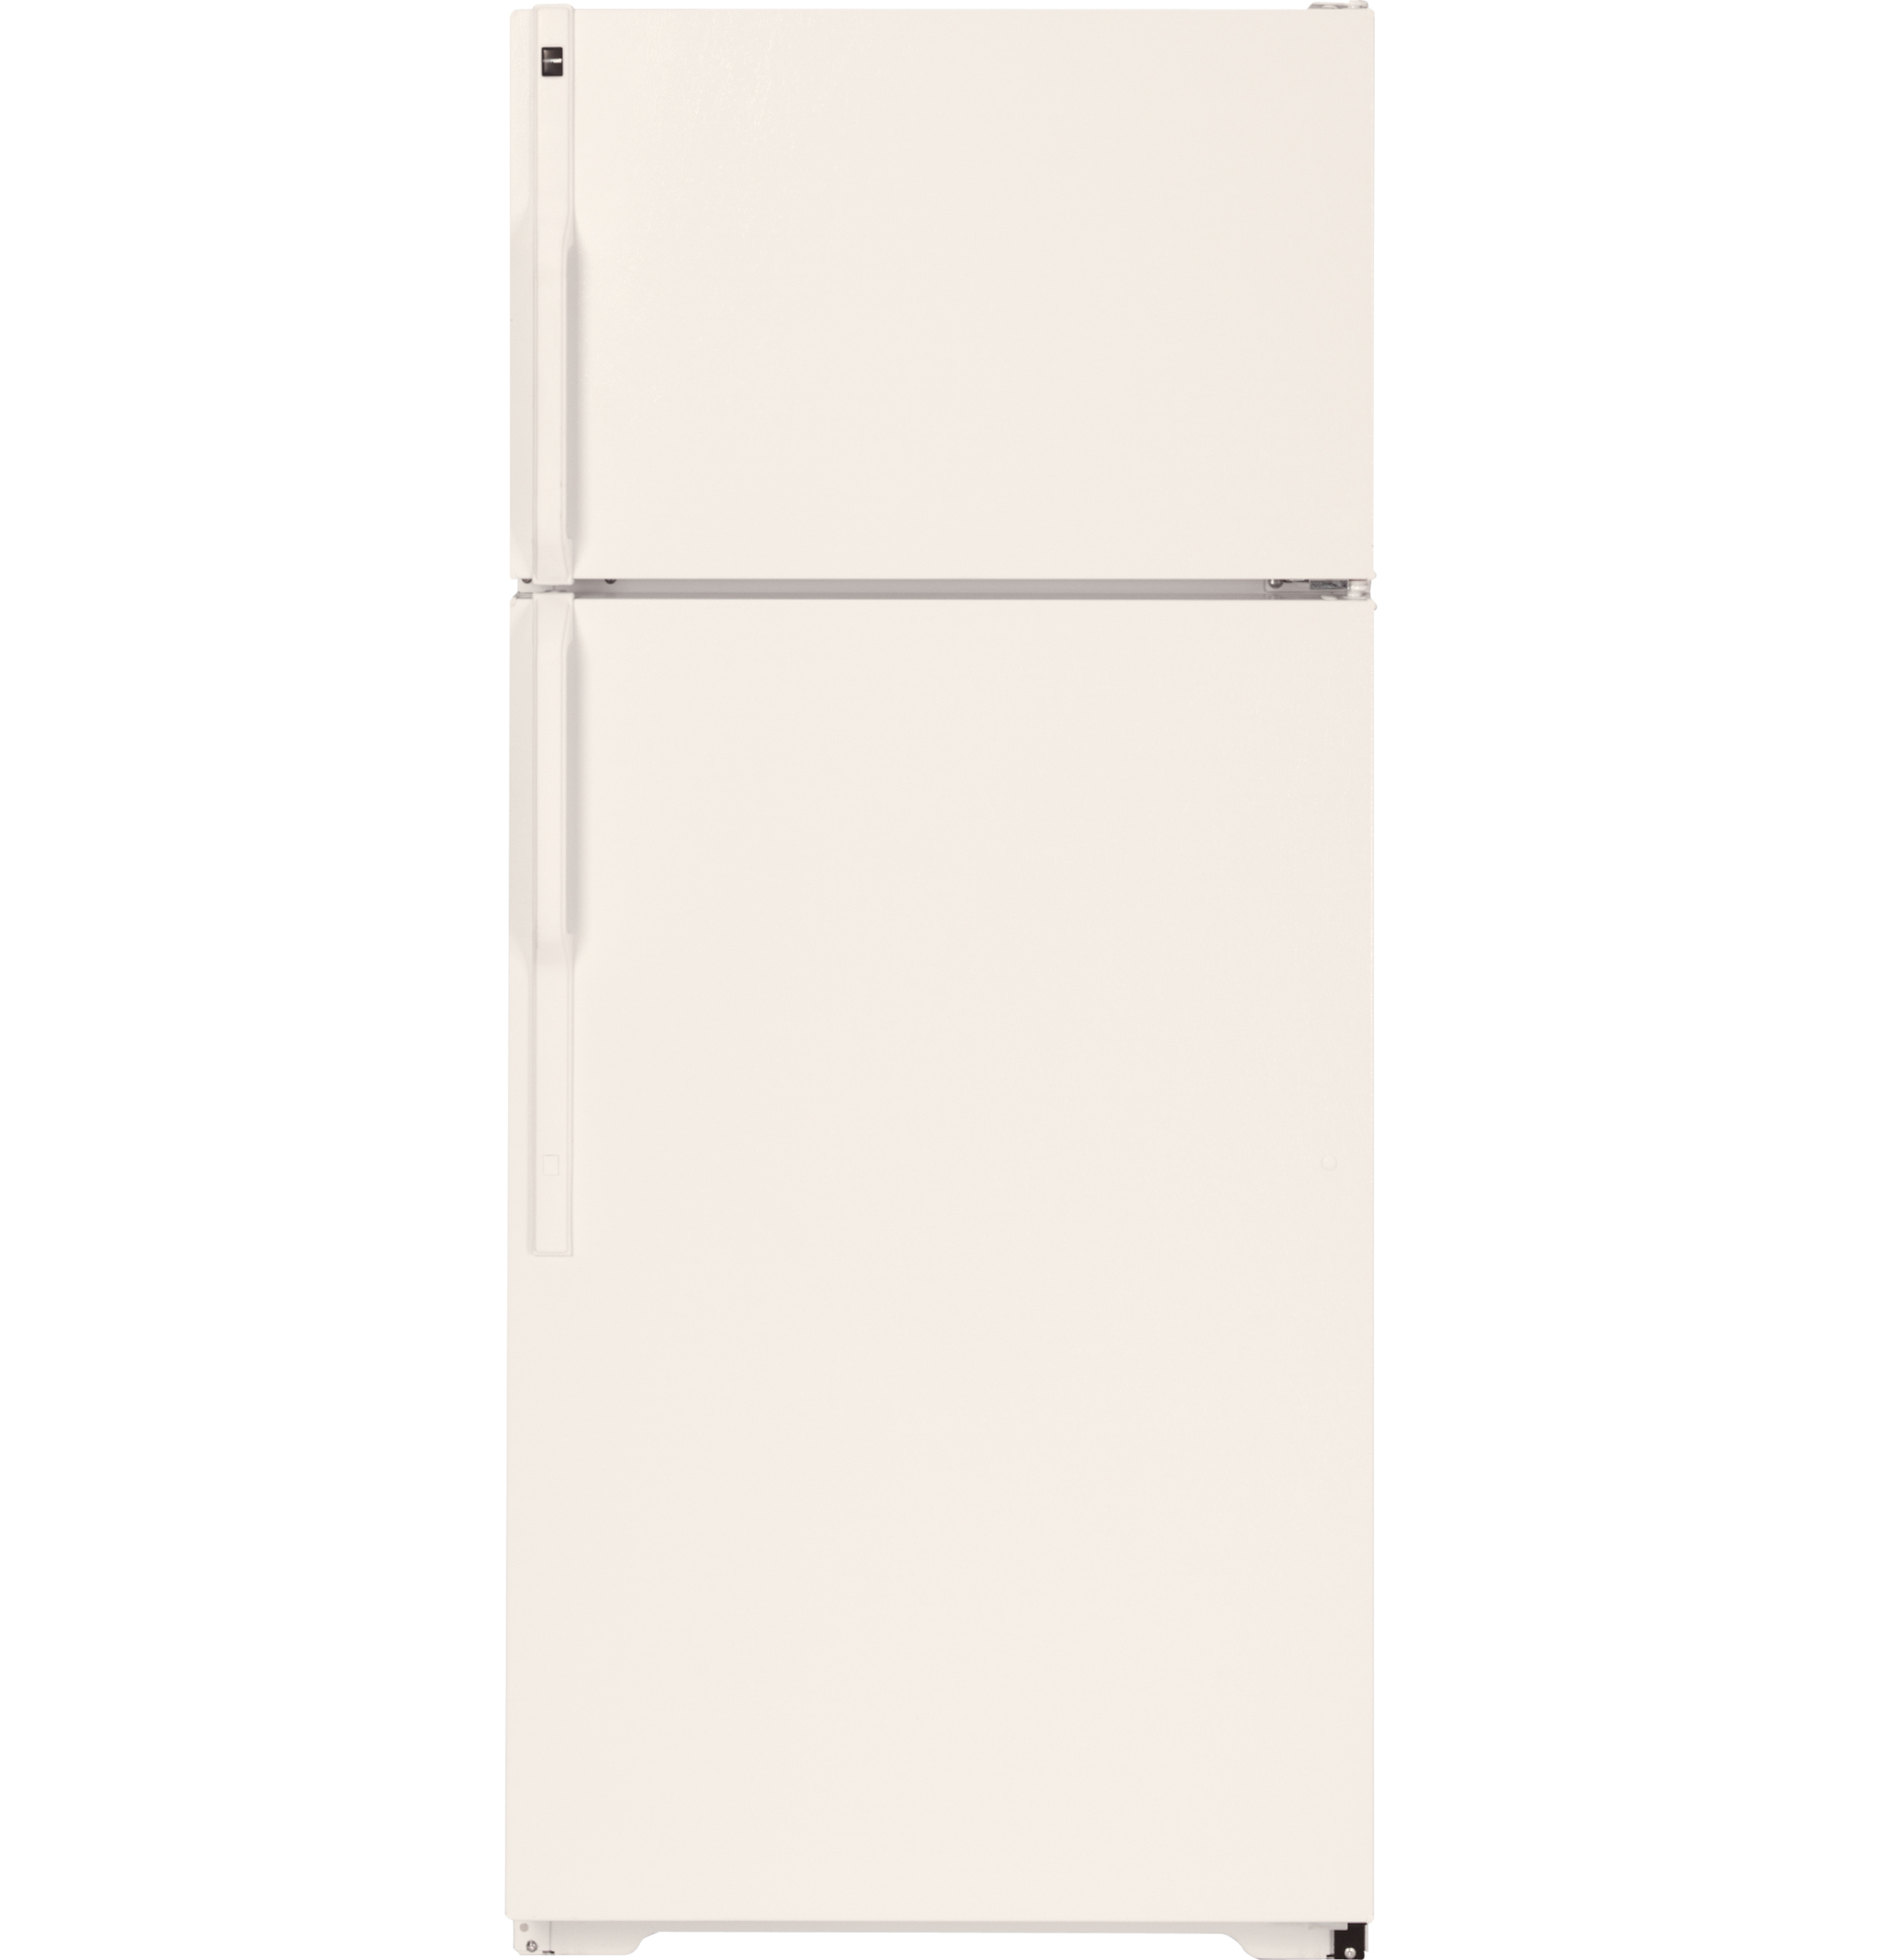 Hotpoint® ENERGY STAR® 14.9 Cu. Ft. Top-Freezer Refrigerator